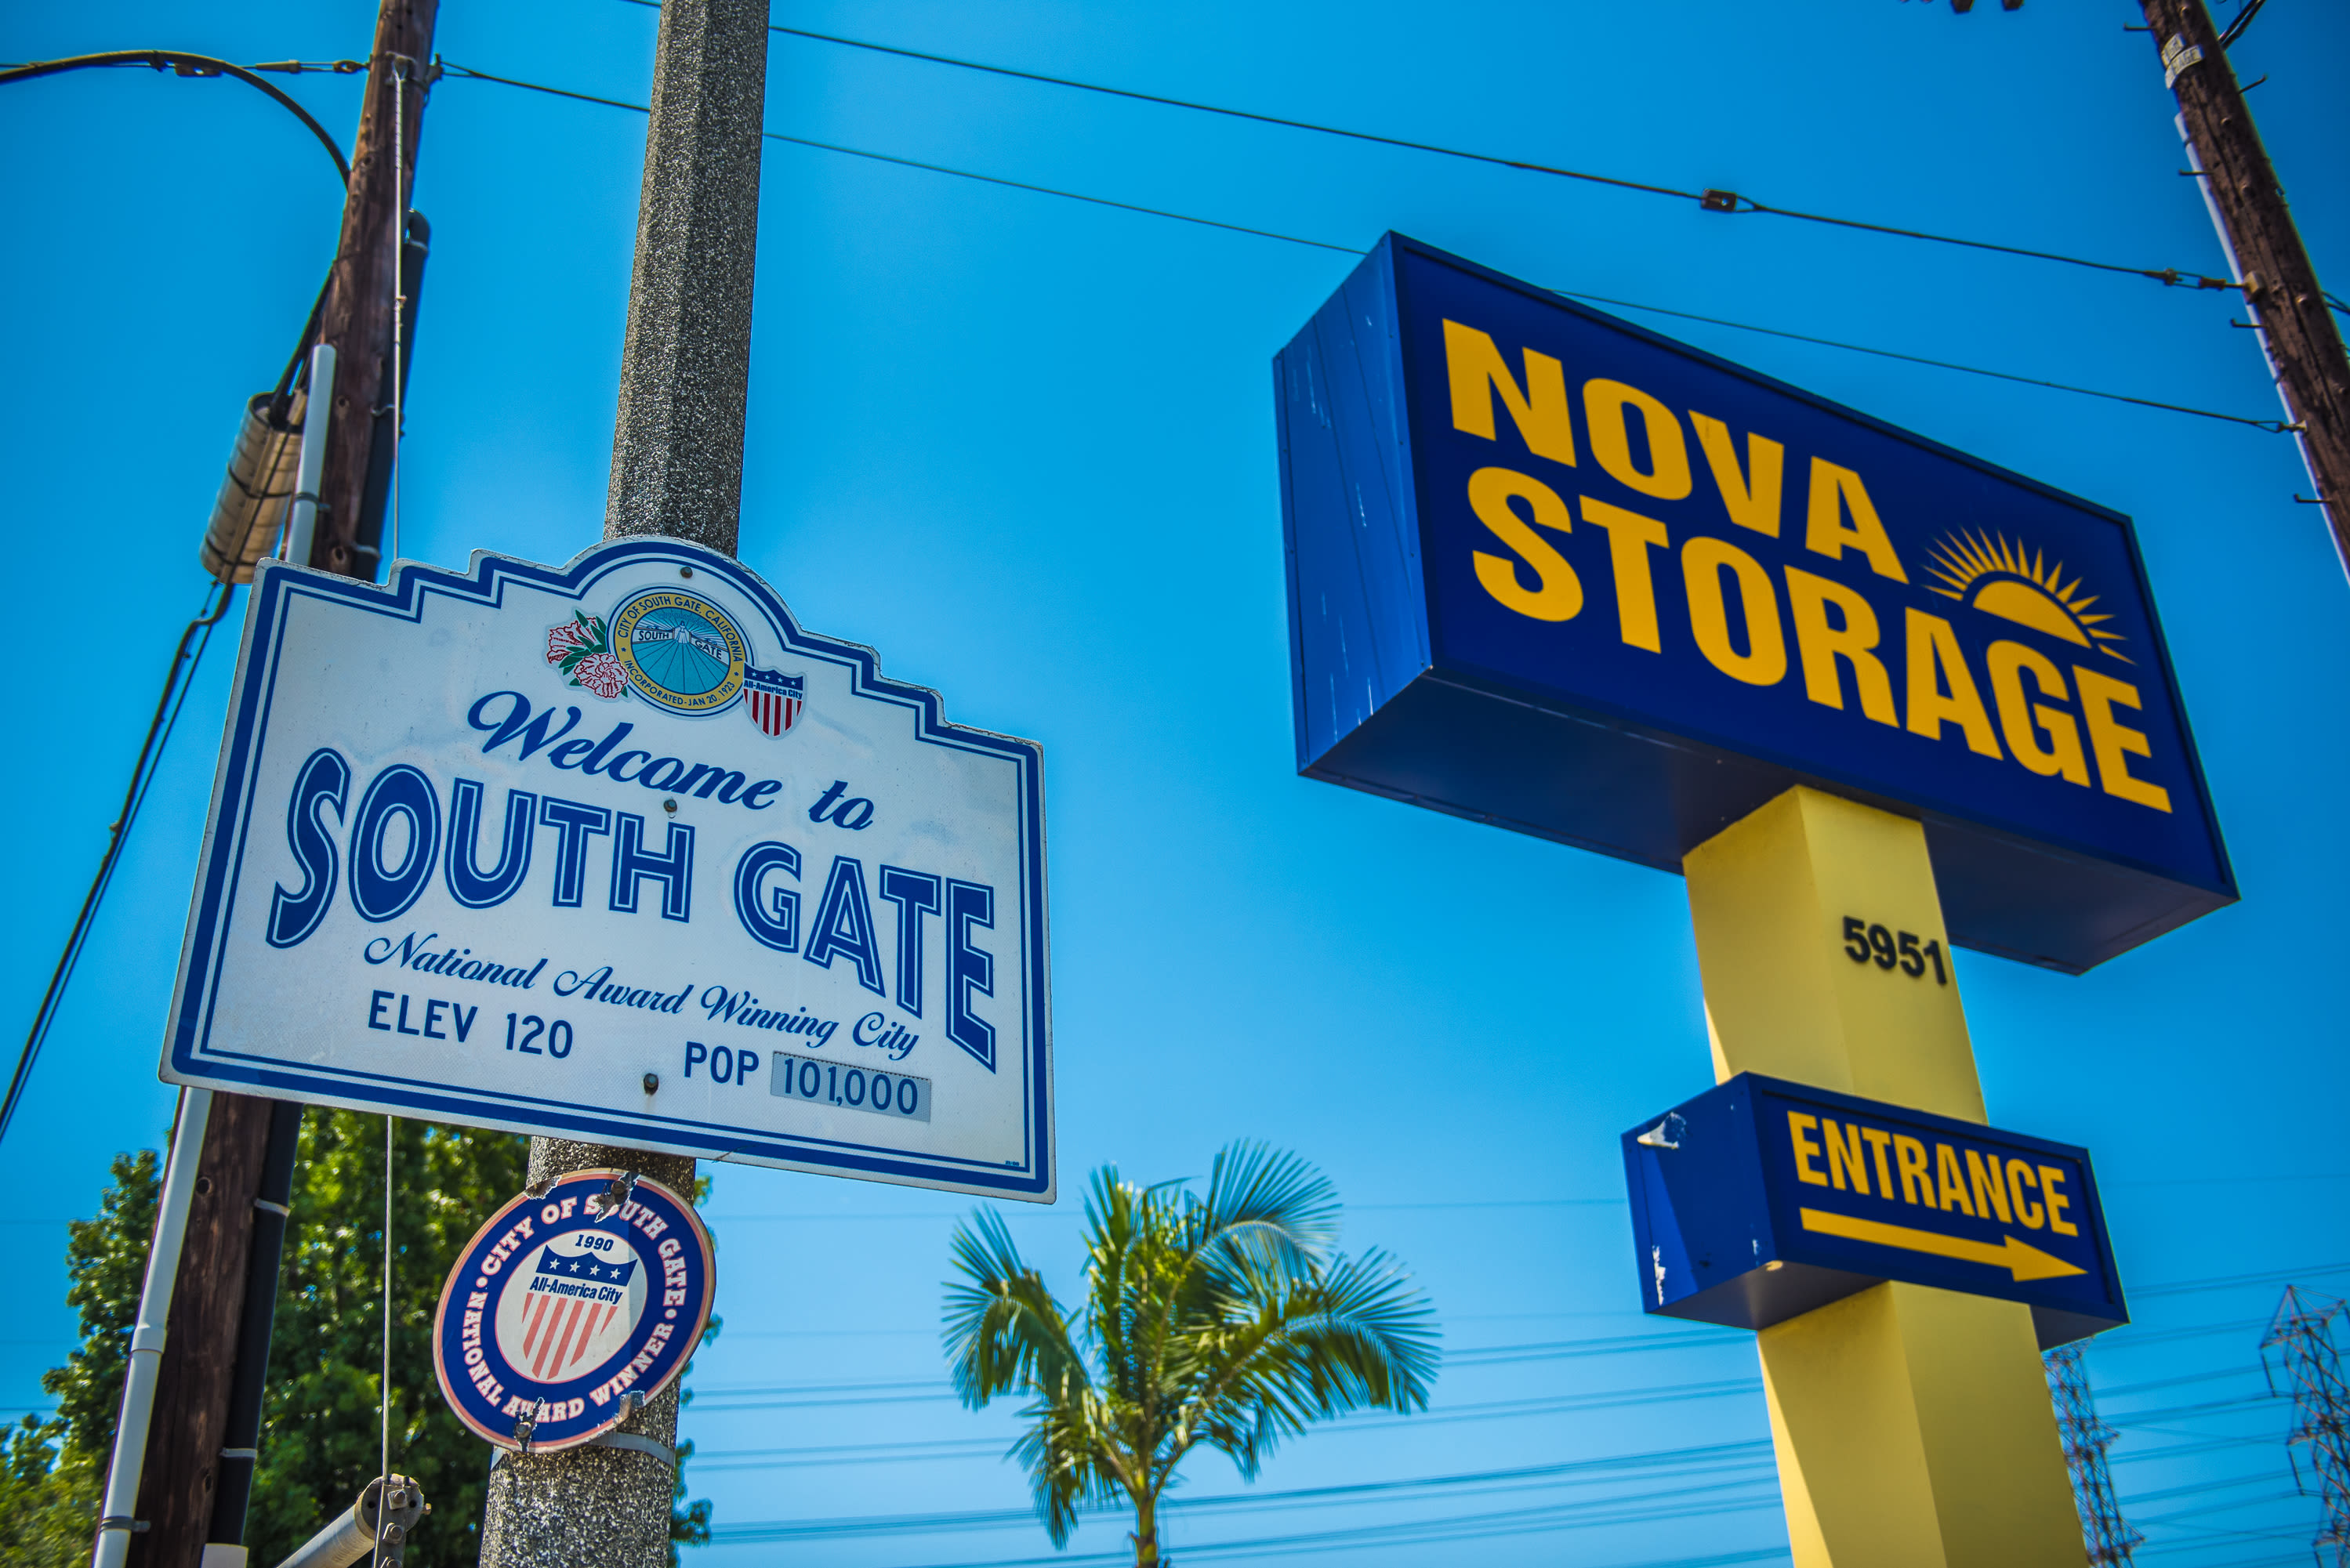 South Gate, CA Storage : Nova Storage